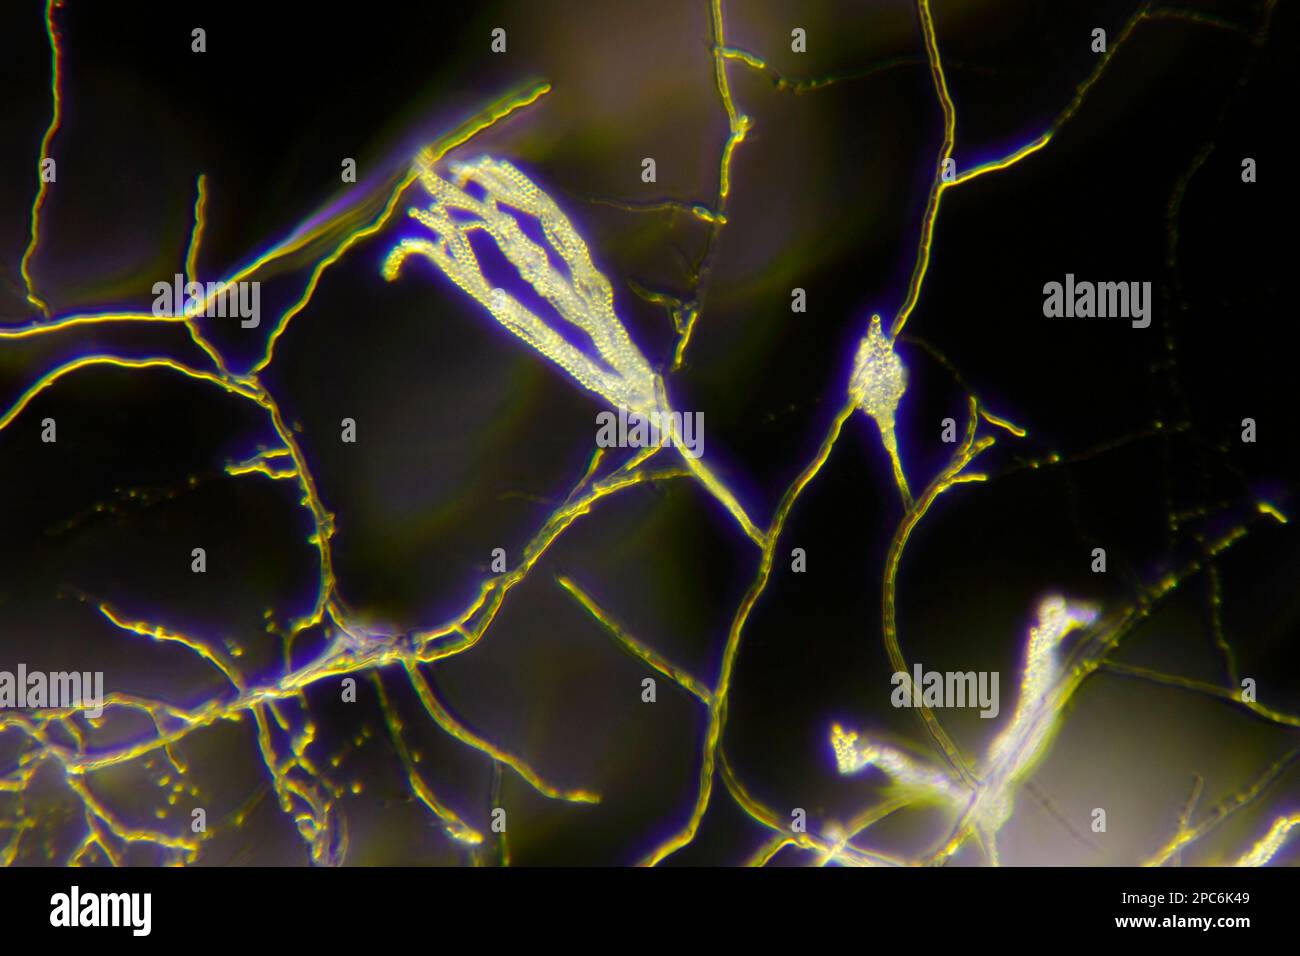 Microscopic view of a mold (Penicillium) and its spores on conidiophores. Darkfield illumination. Stock Photo